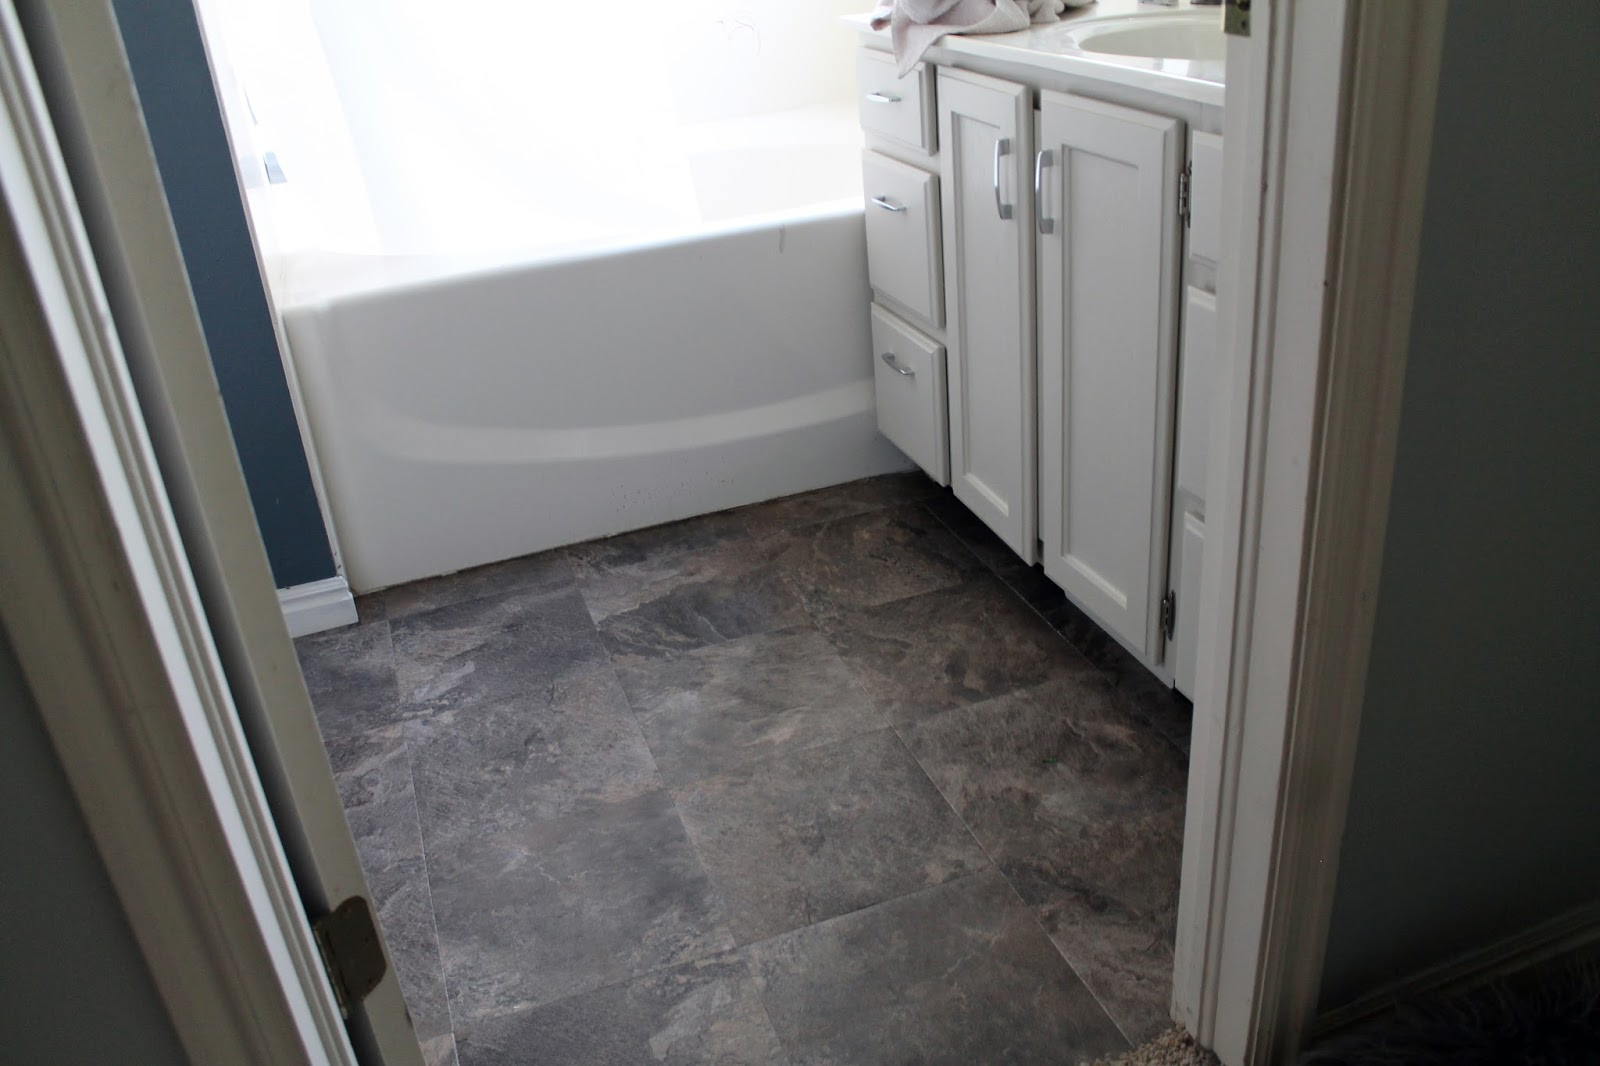 Adhesive Bathroom Floor Tiles
 31 great ideas and pictures of self adhesive vinyl floor